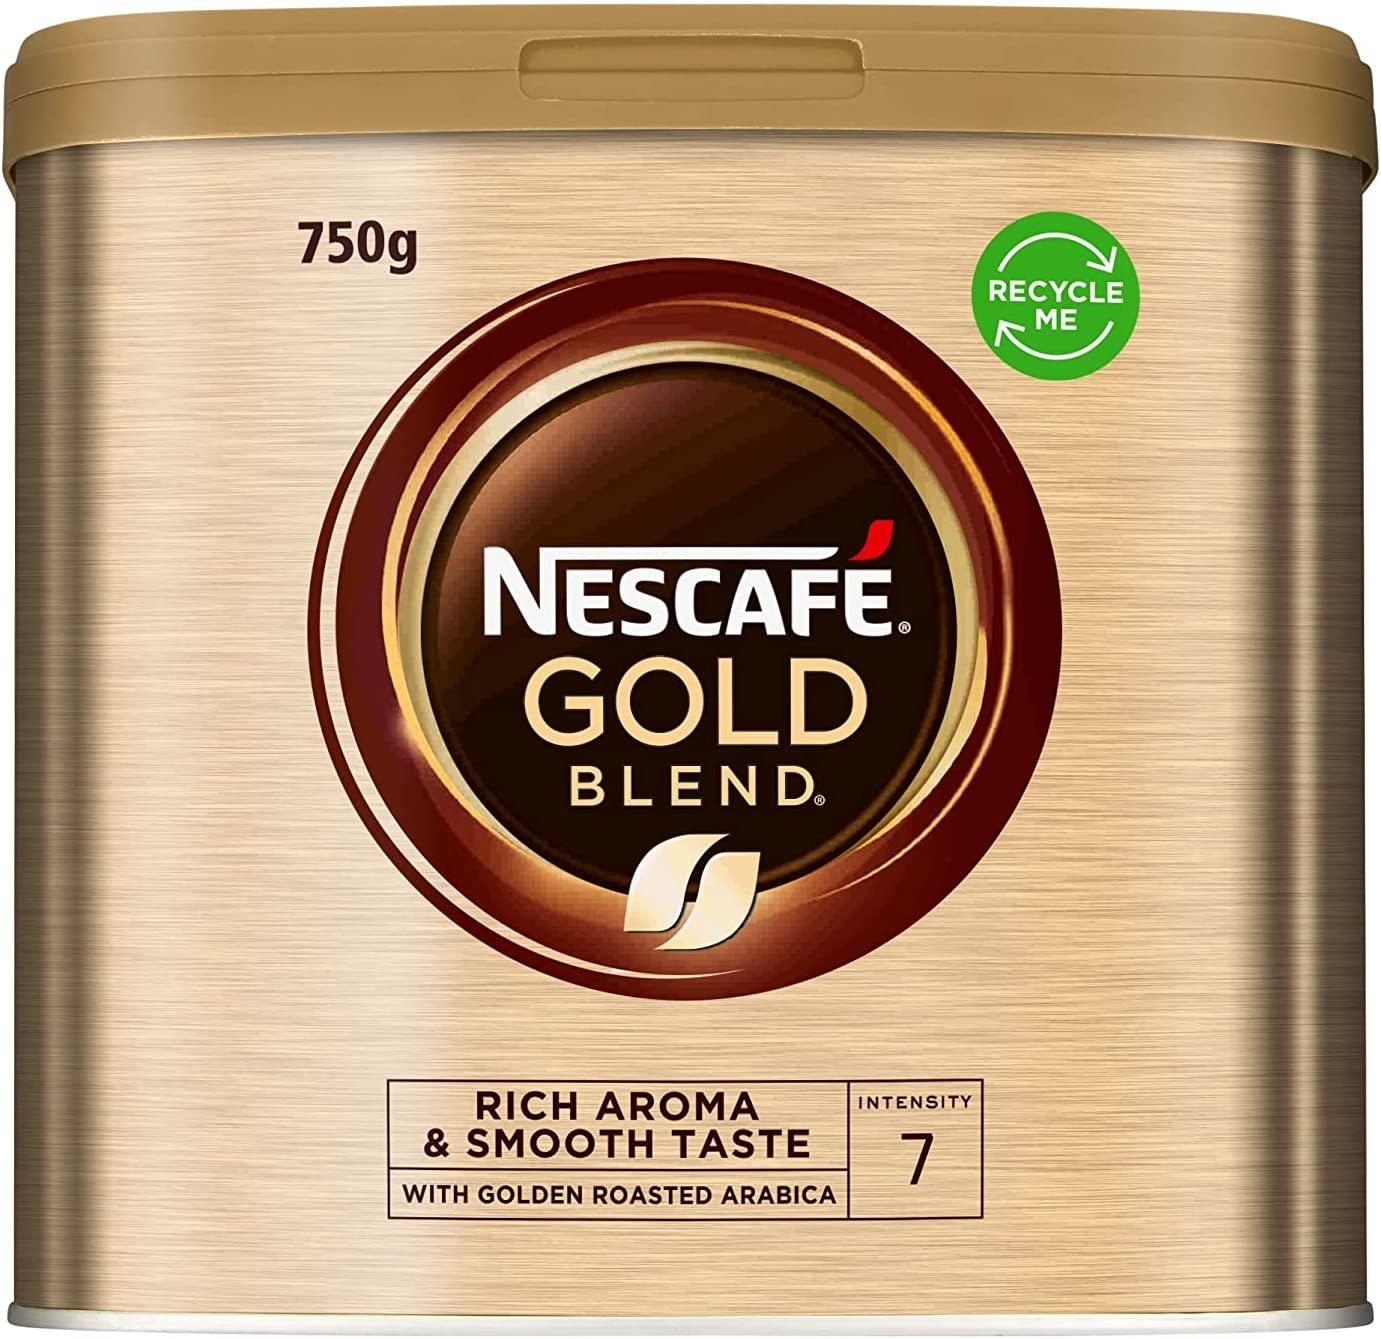 Nescafe Gold Blend: Coffee Tin 750g - Vending Superstore